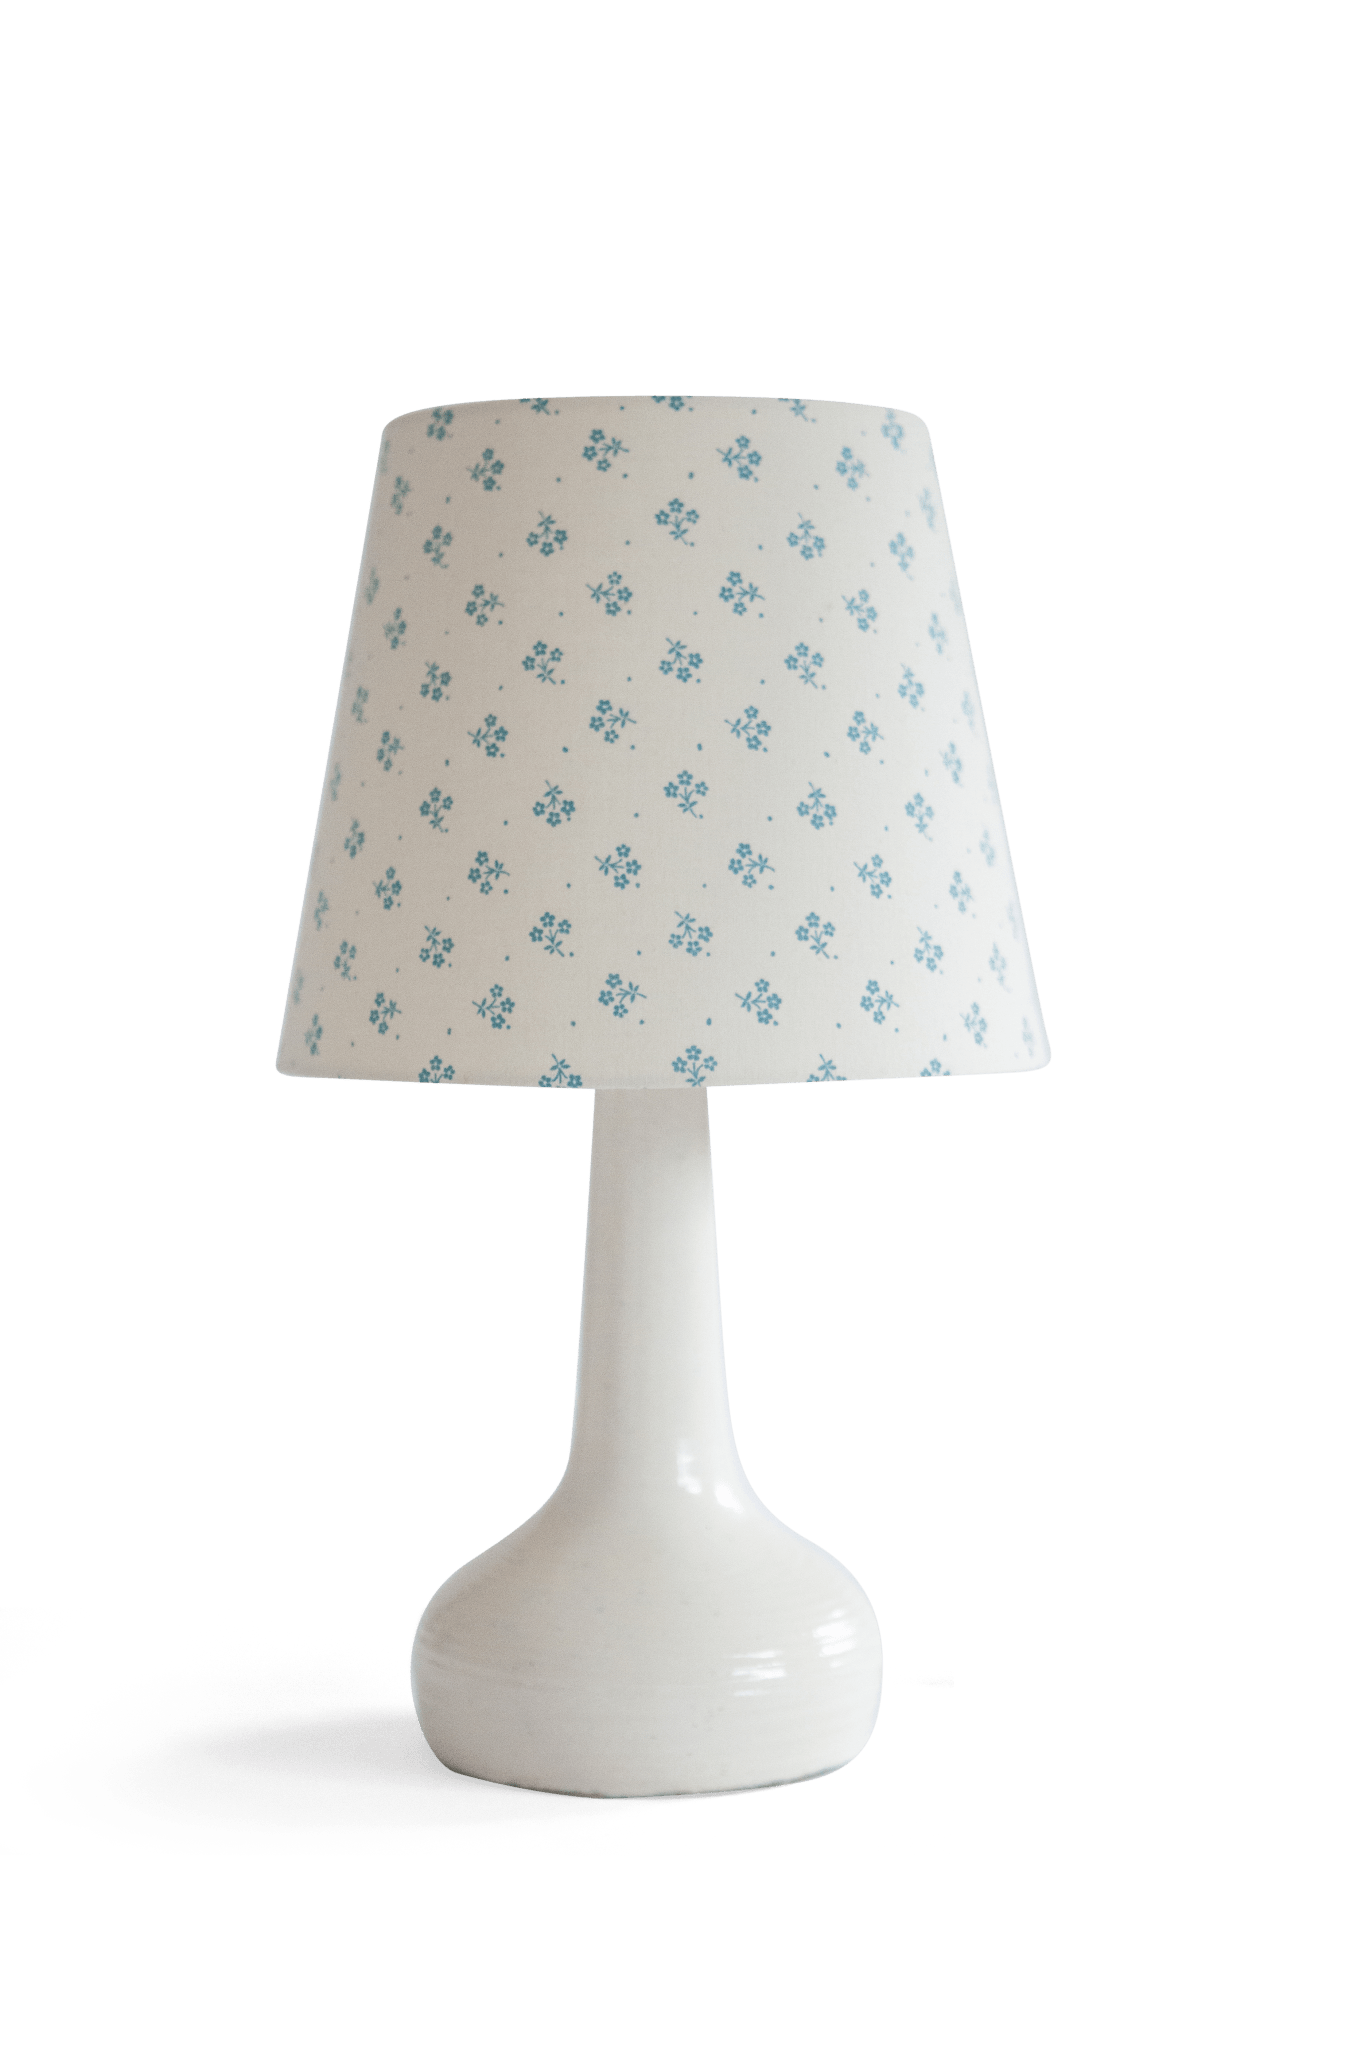 Lamp Shade - Vintage Laura Ashley